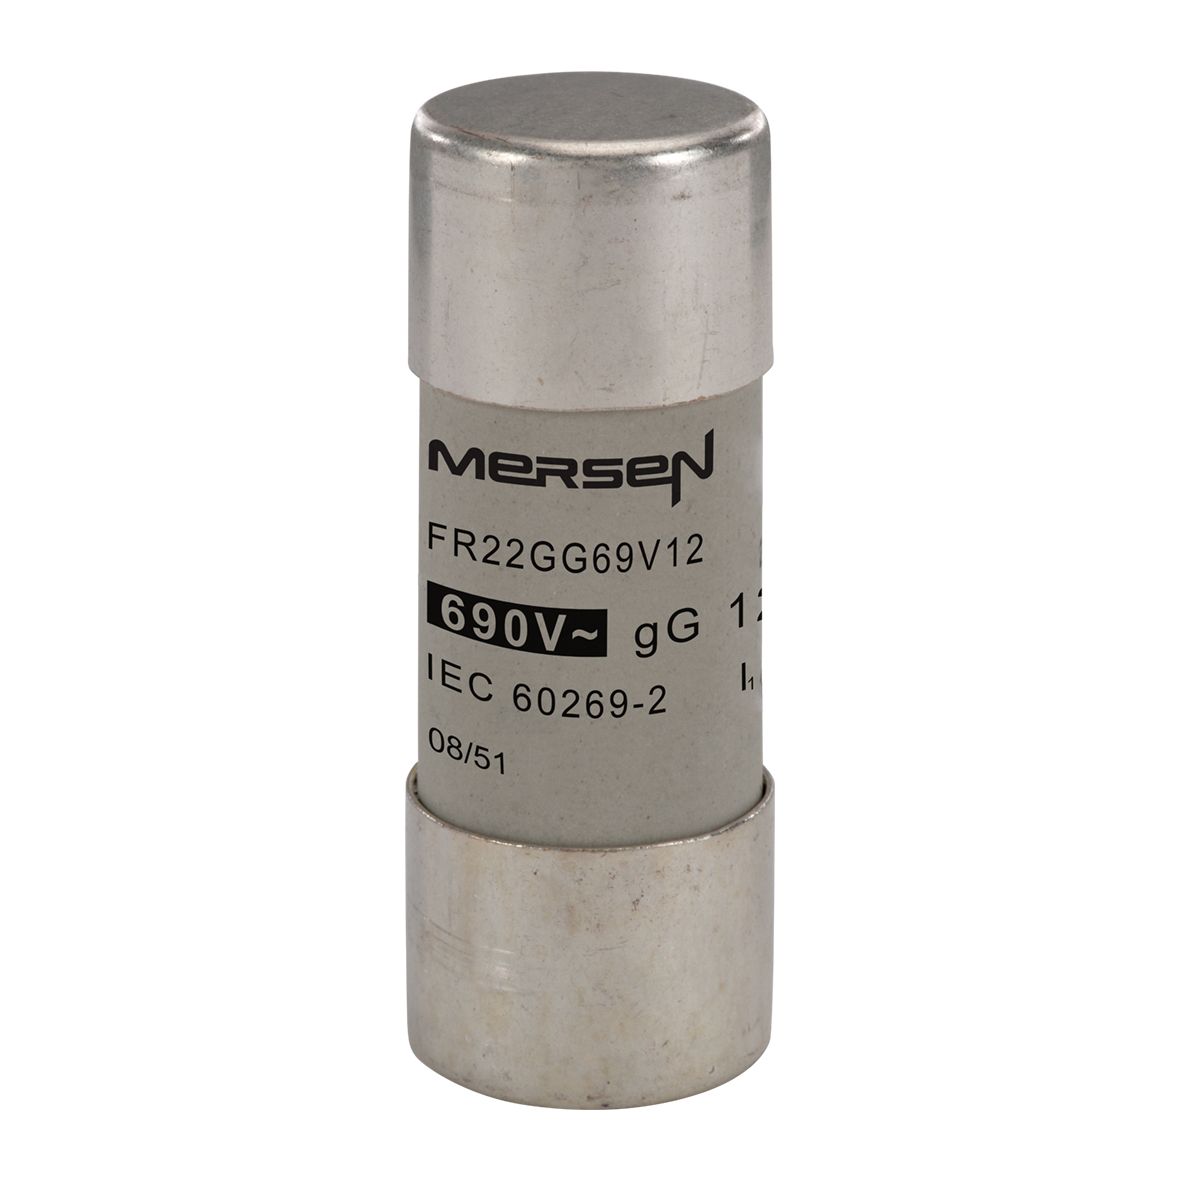 J201304 - Cylindrical fuse-link gG 690VAC 22.2x58, 12A